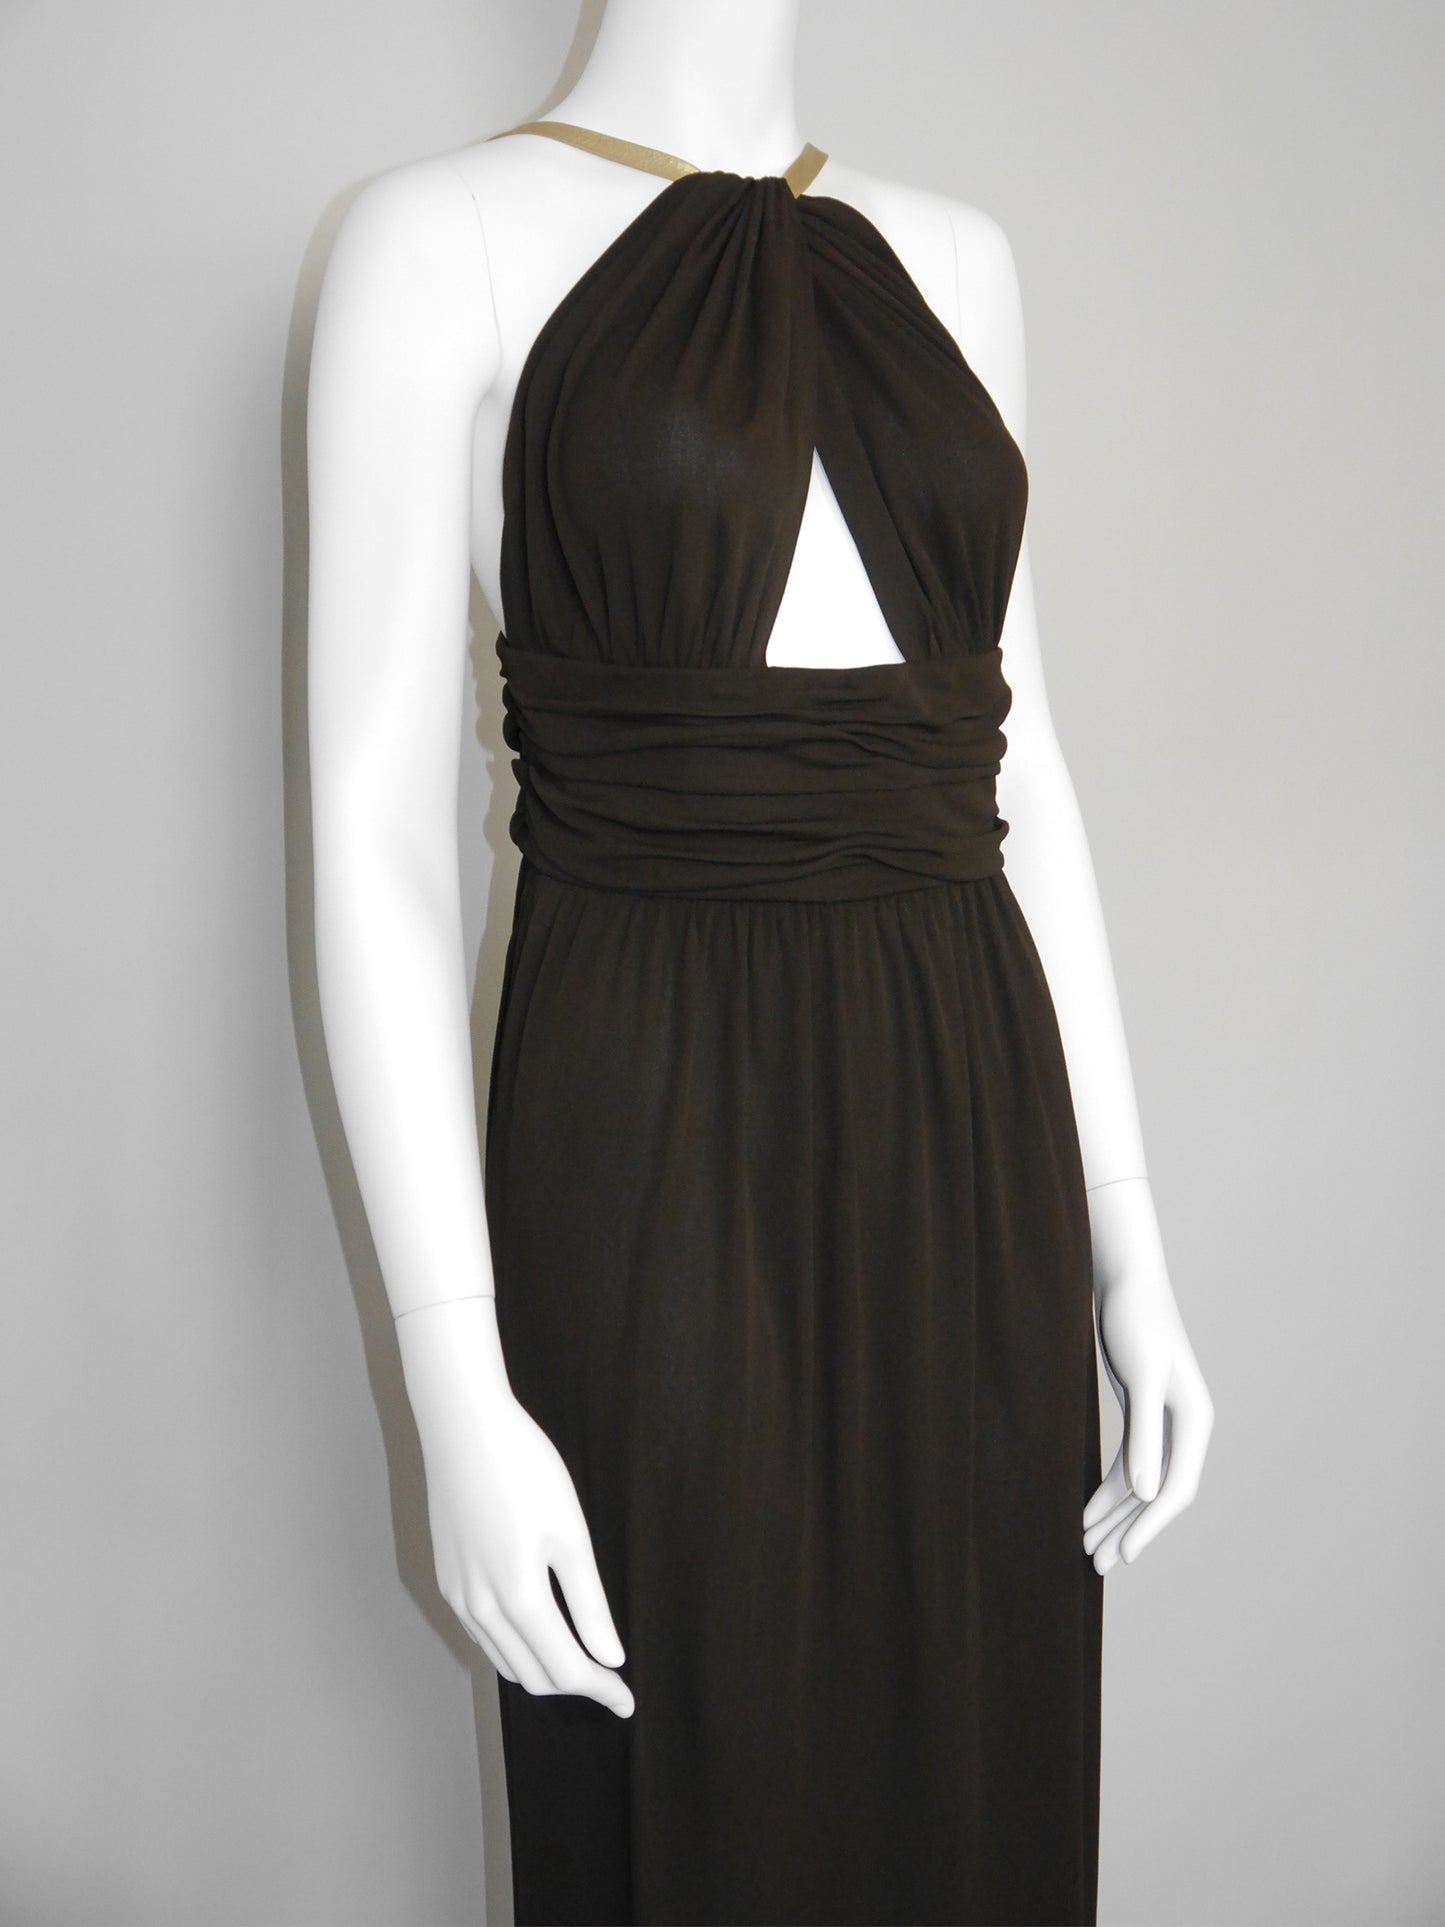 YVES SAINT LAURENT Fall 1975 Vintage Keyhole Maxi Evening Dress Goddess Gown